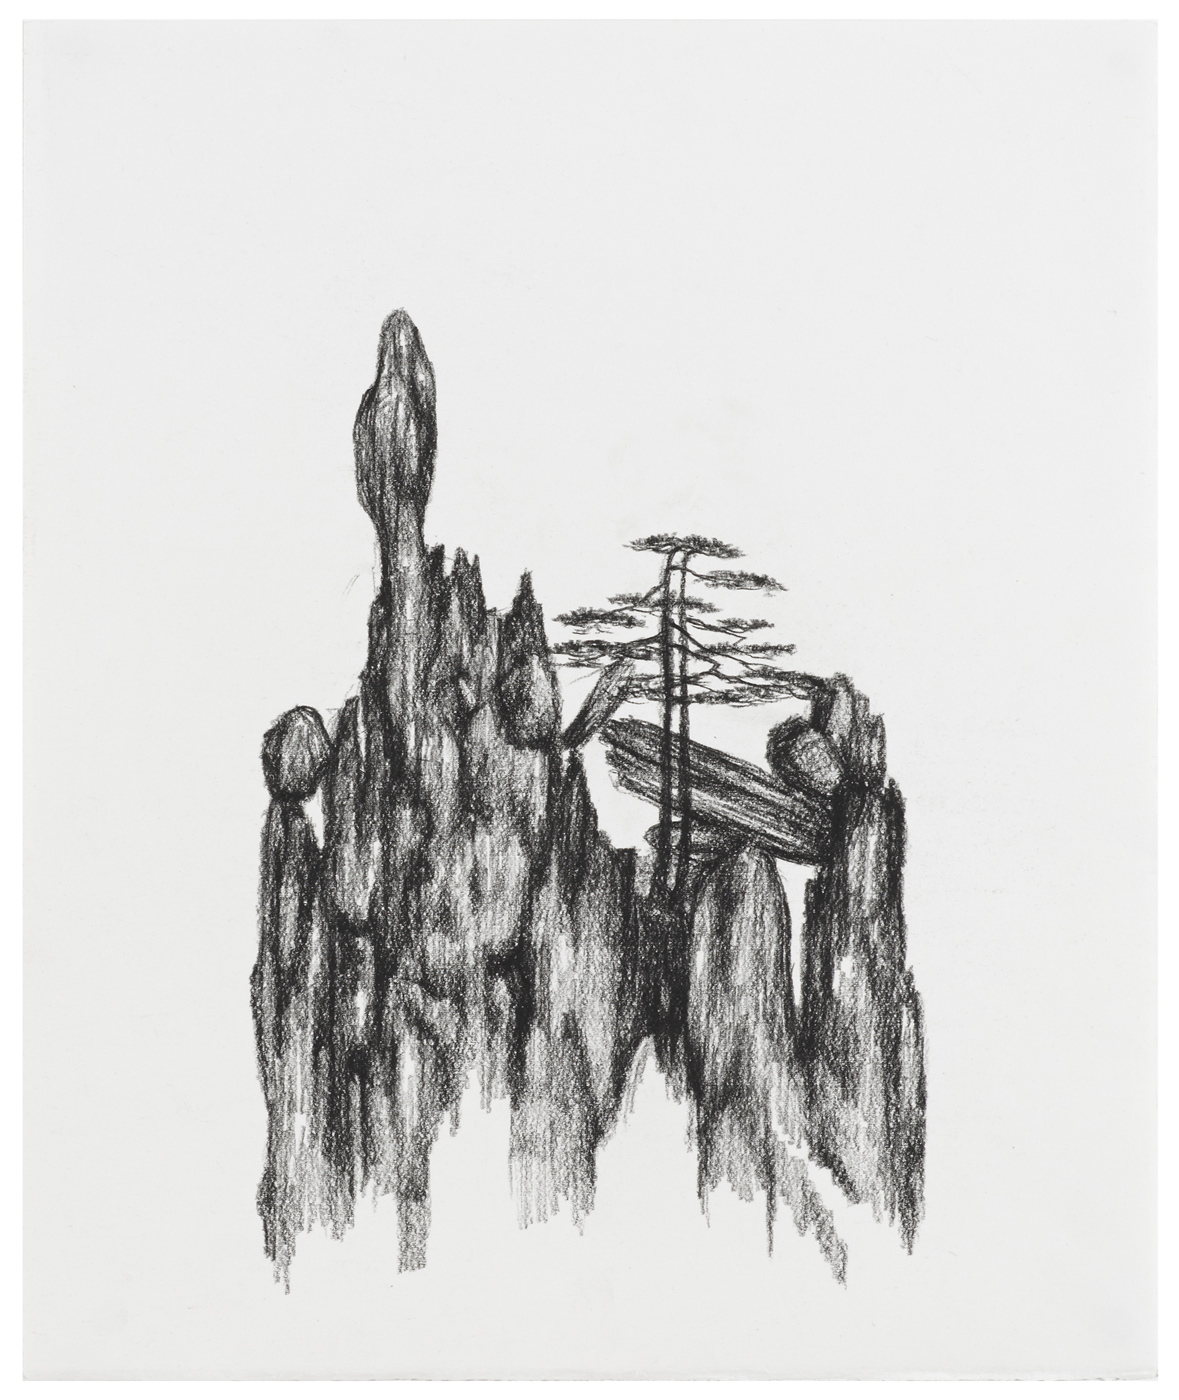 Mountain Peak with Pines and Boulders, Christian Hidaka